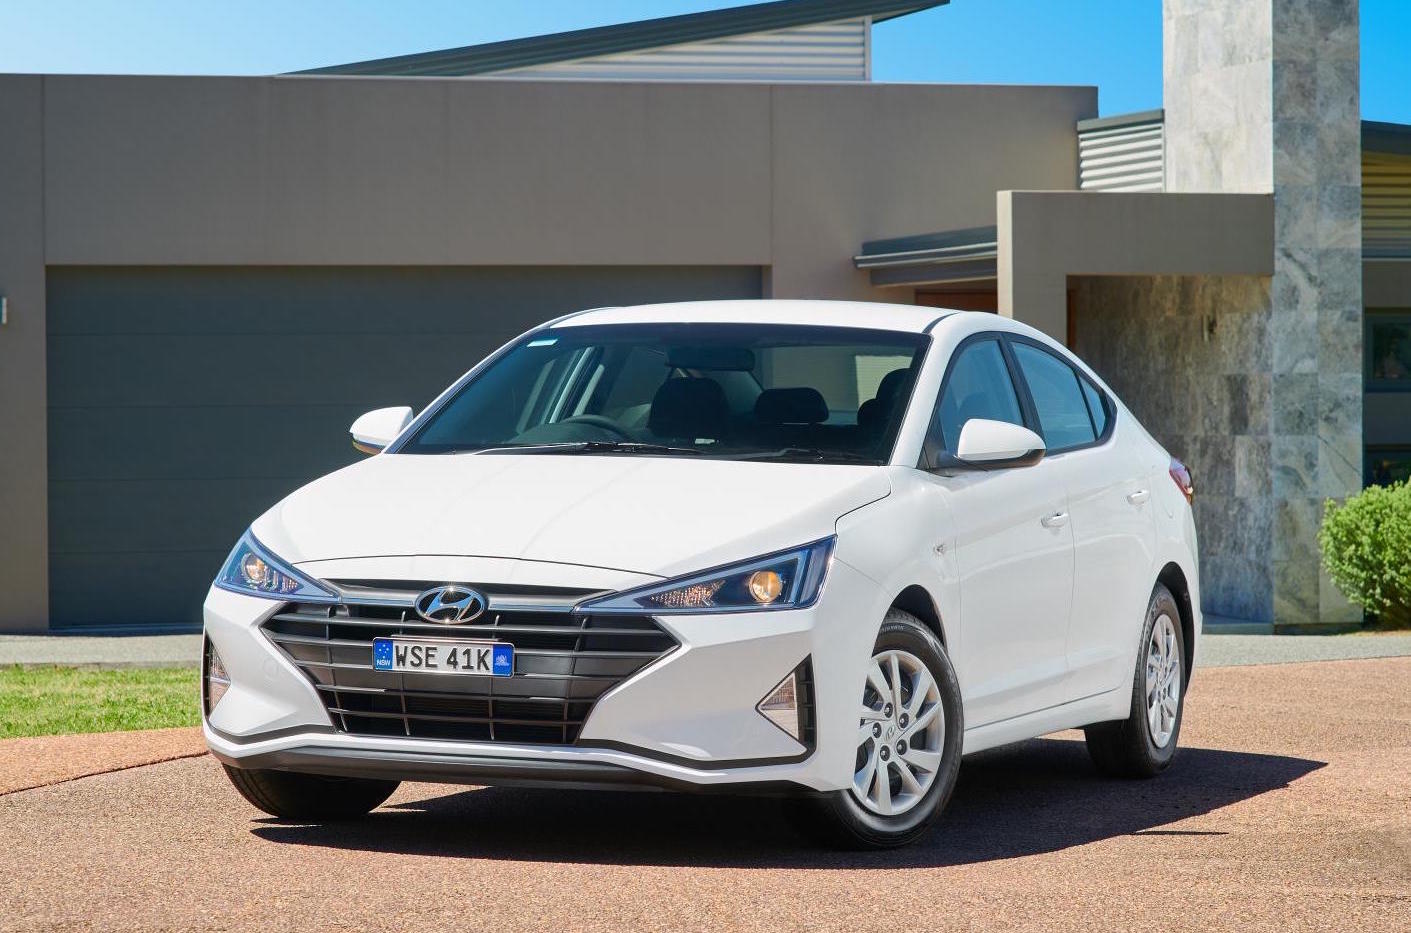 2019 Hyundai Elantra on sale in Australia, Go variant